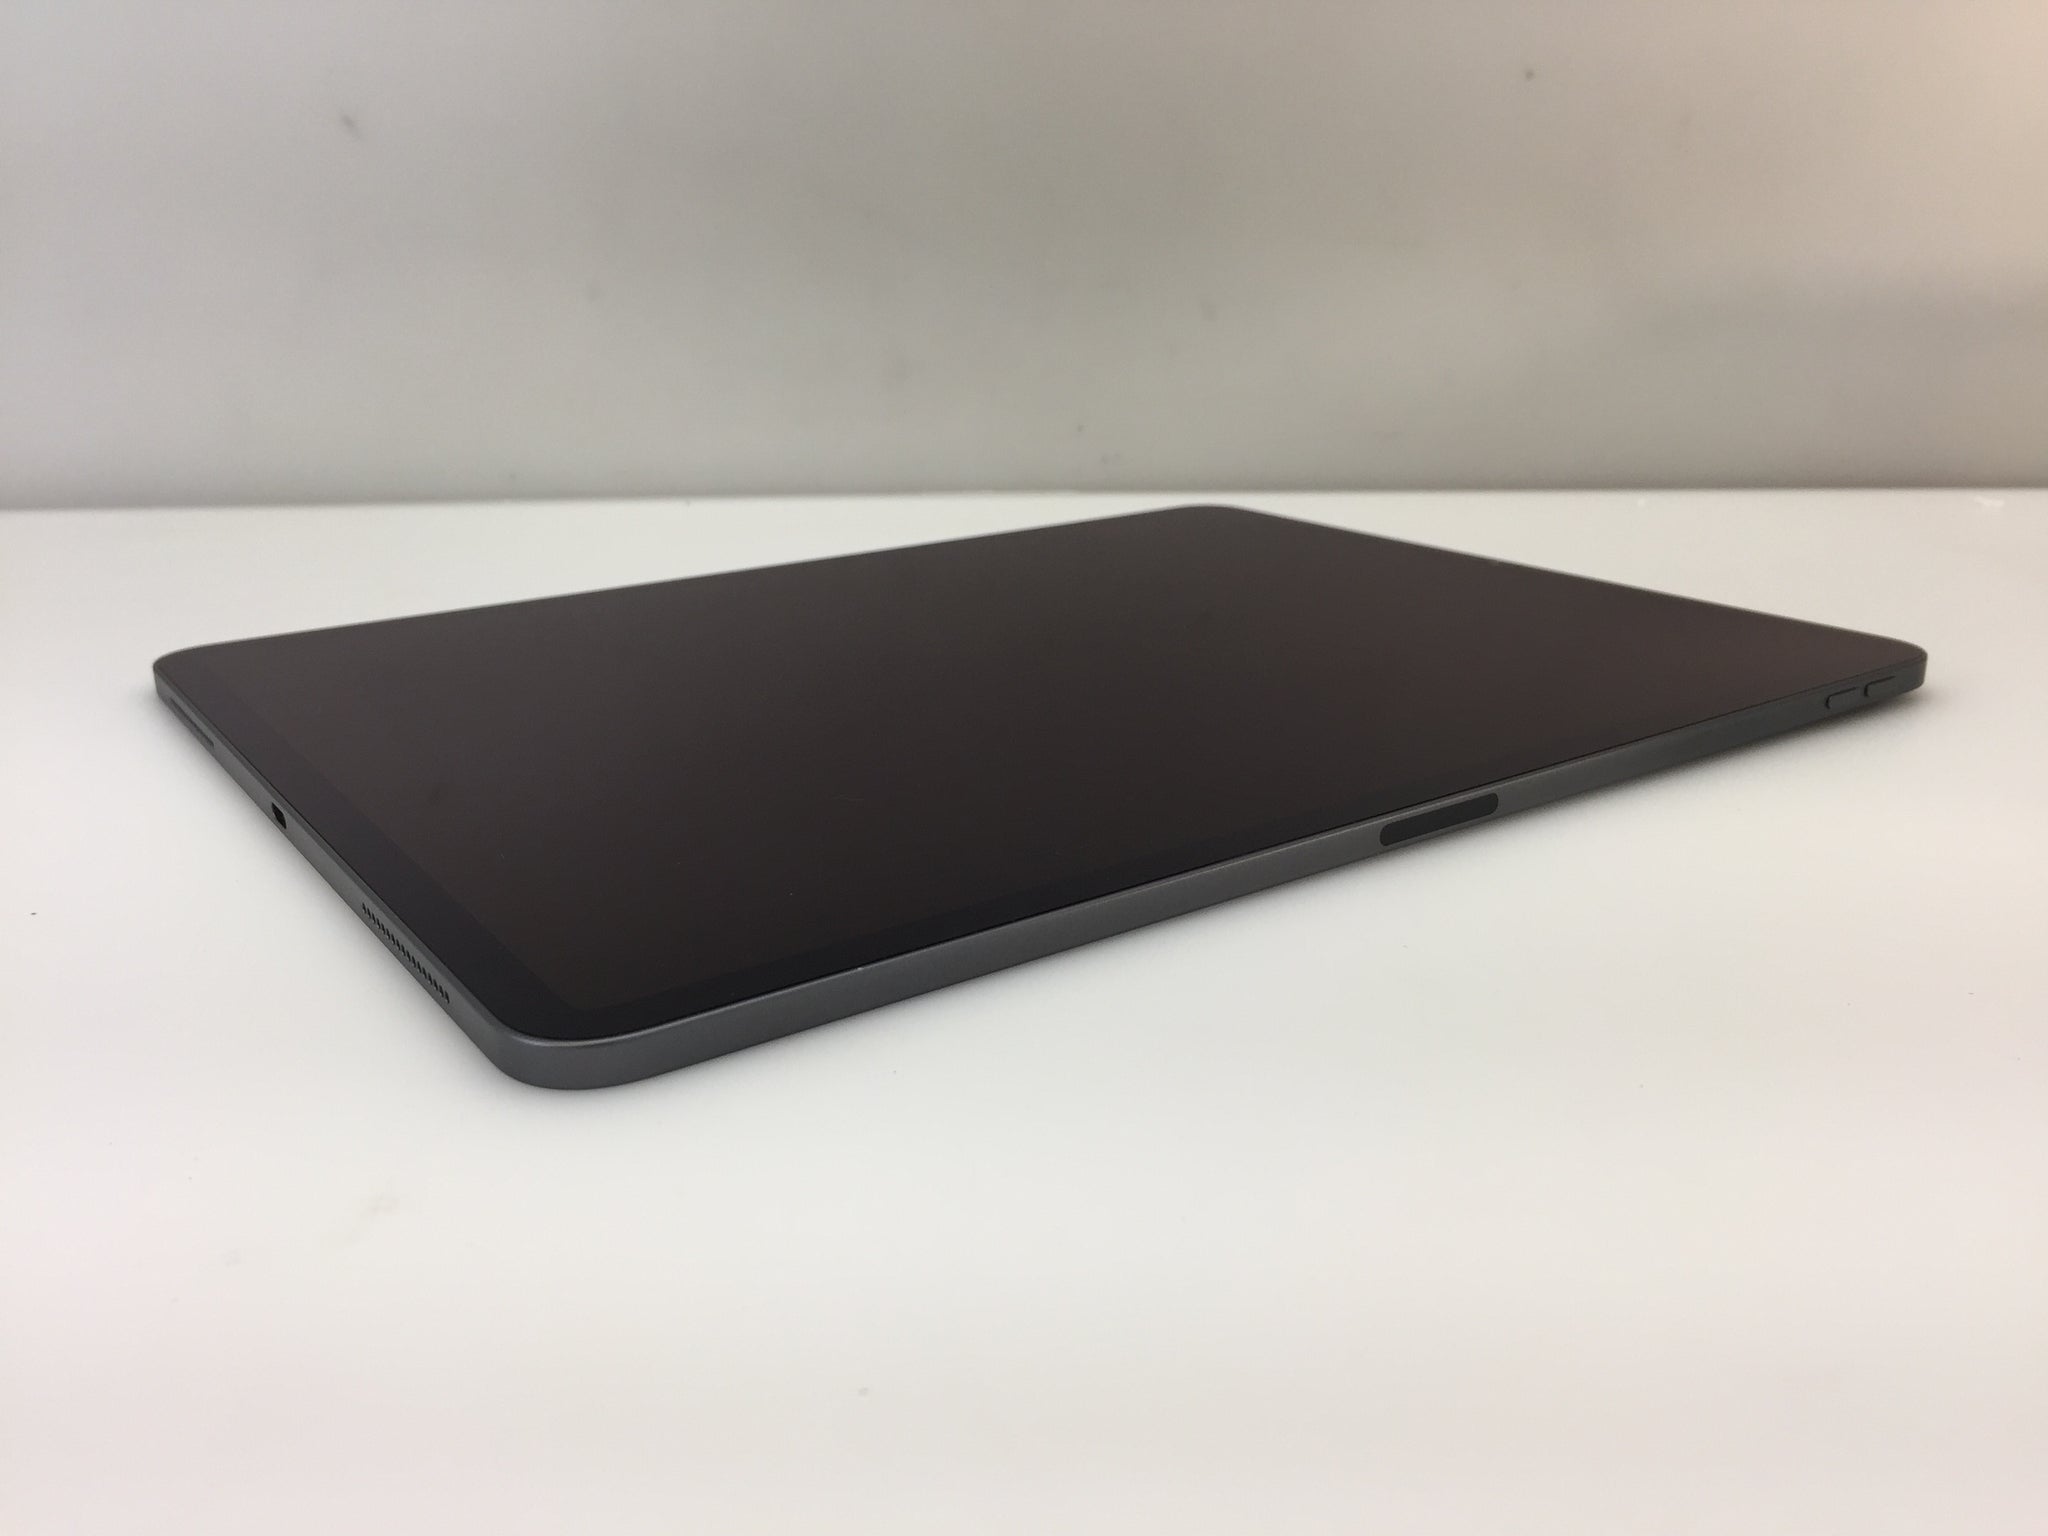 iPad Pro 12.9-in 64GB Wifi + Cellular Space Gray (2018)